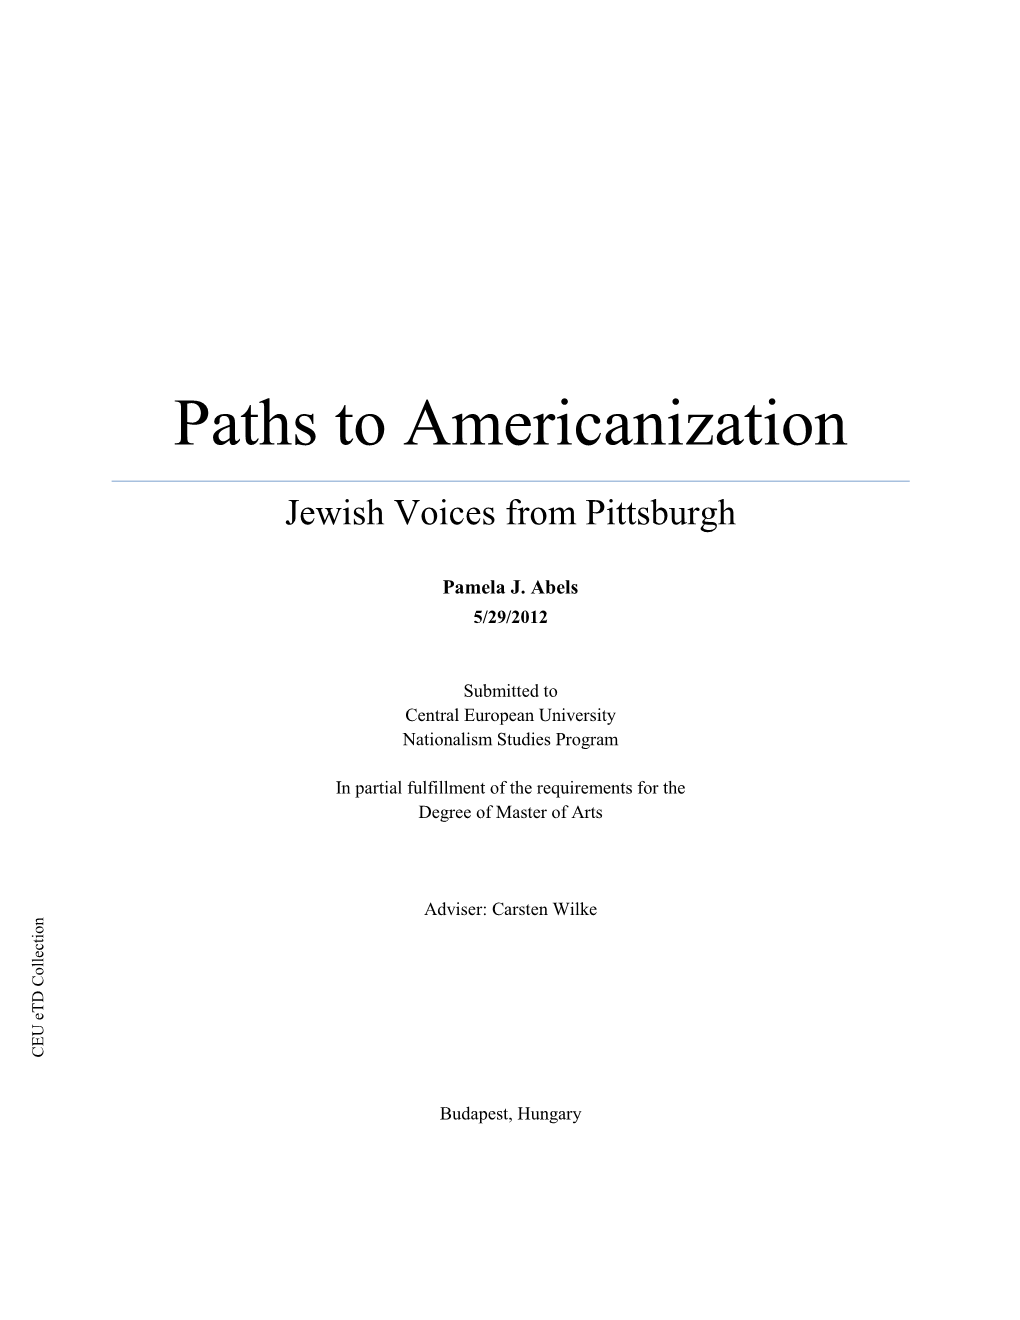 Paths to Americanization